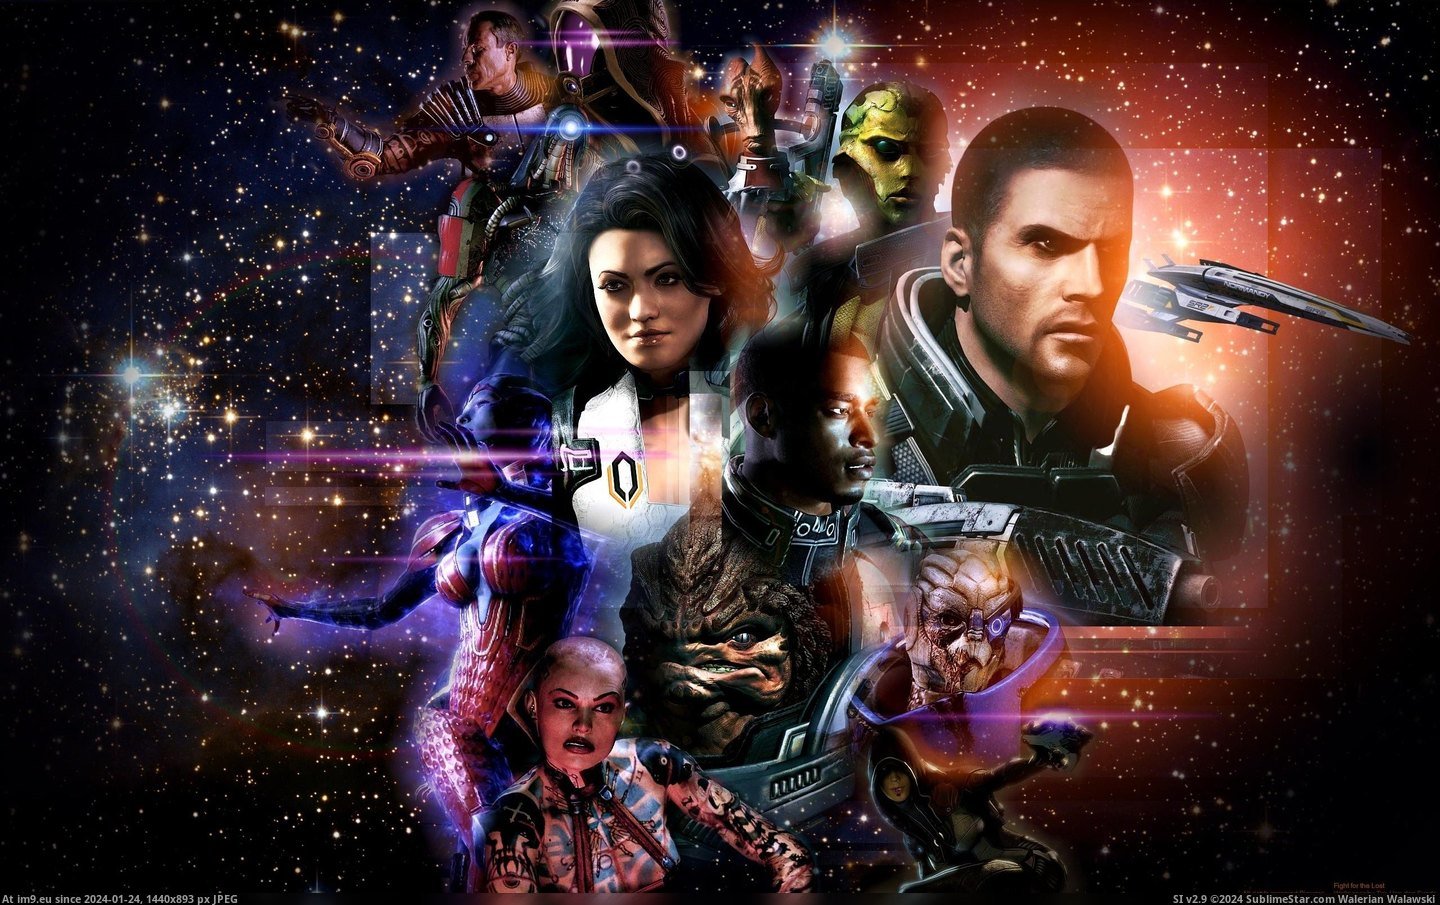 #Game #Effect #Mass #Video Video Game Mass Effect 2 106415 Pic. (Bild von album Games Wallpapers))